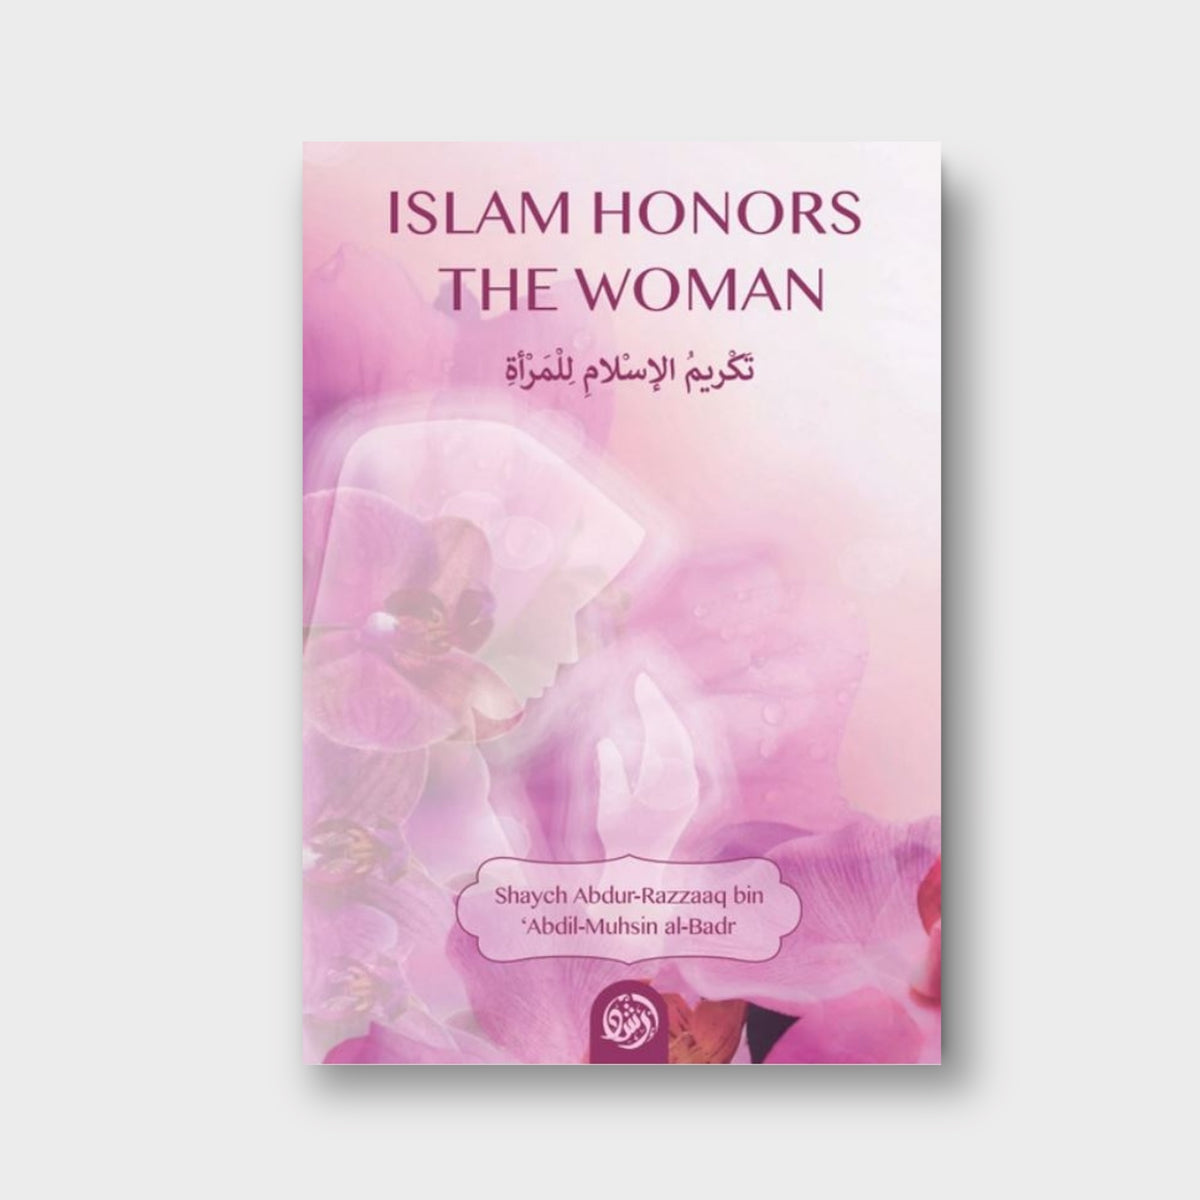 Islam Honors The Woman